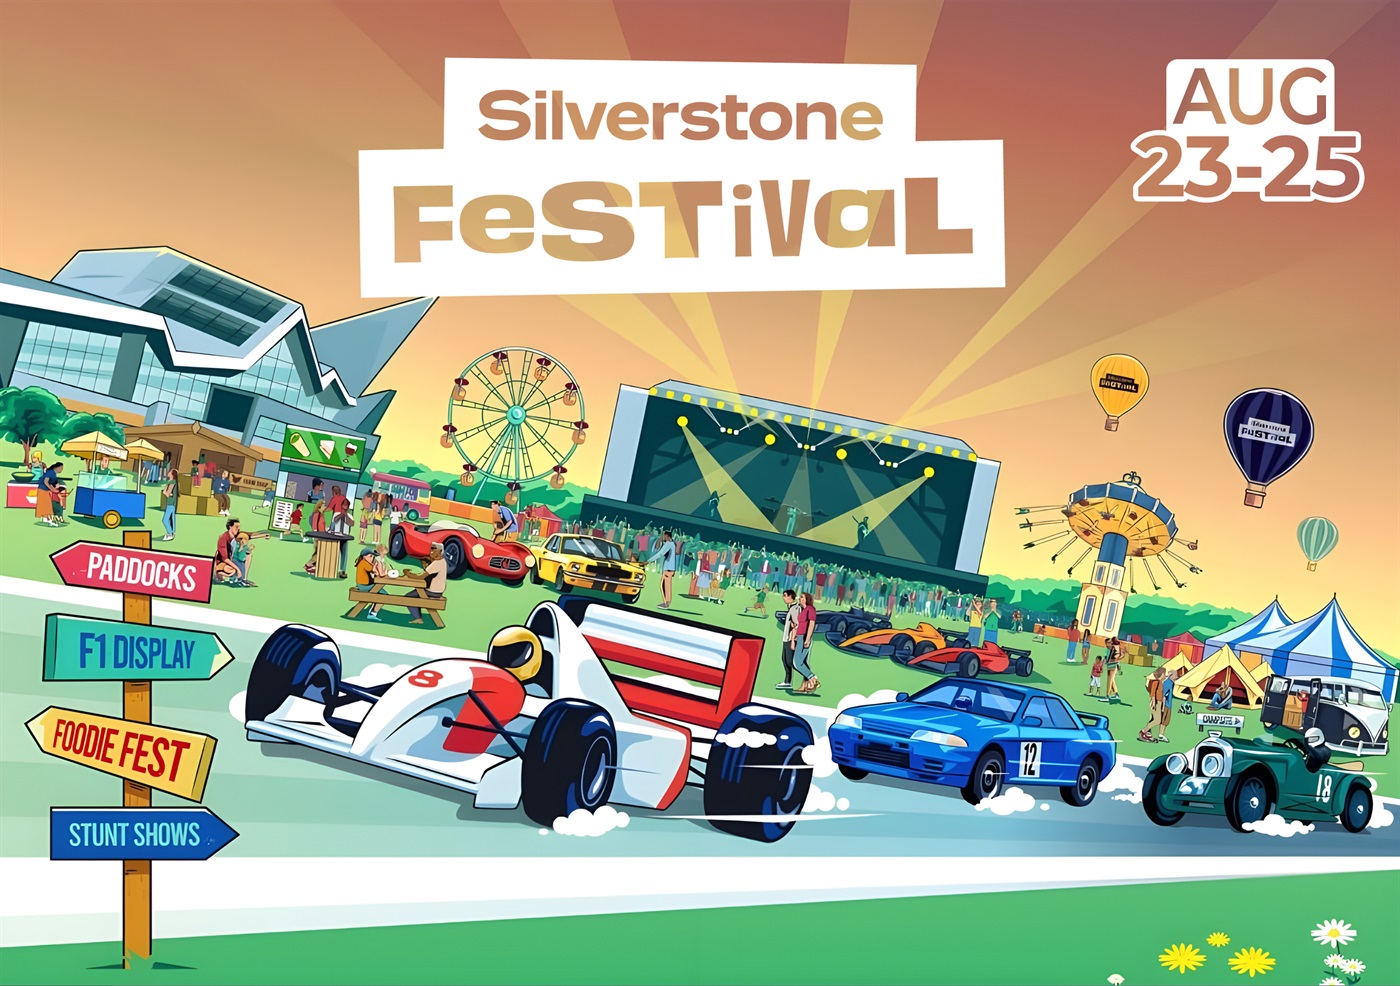 Silverstone Festival será realizado em agosto na Inglaterra e promoverá homenagem a Ayrton Senna